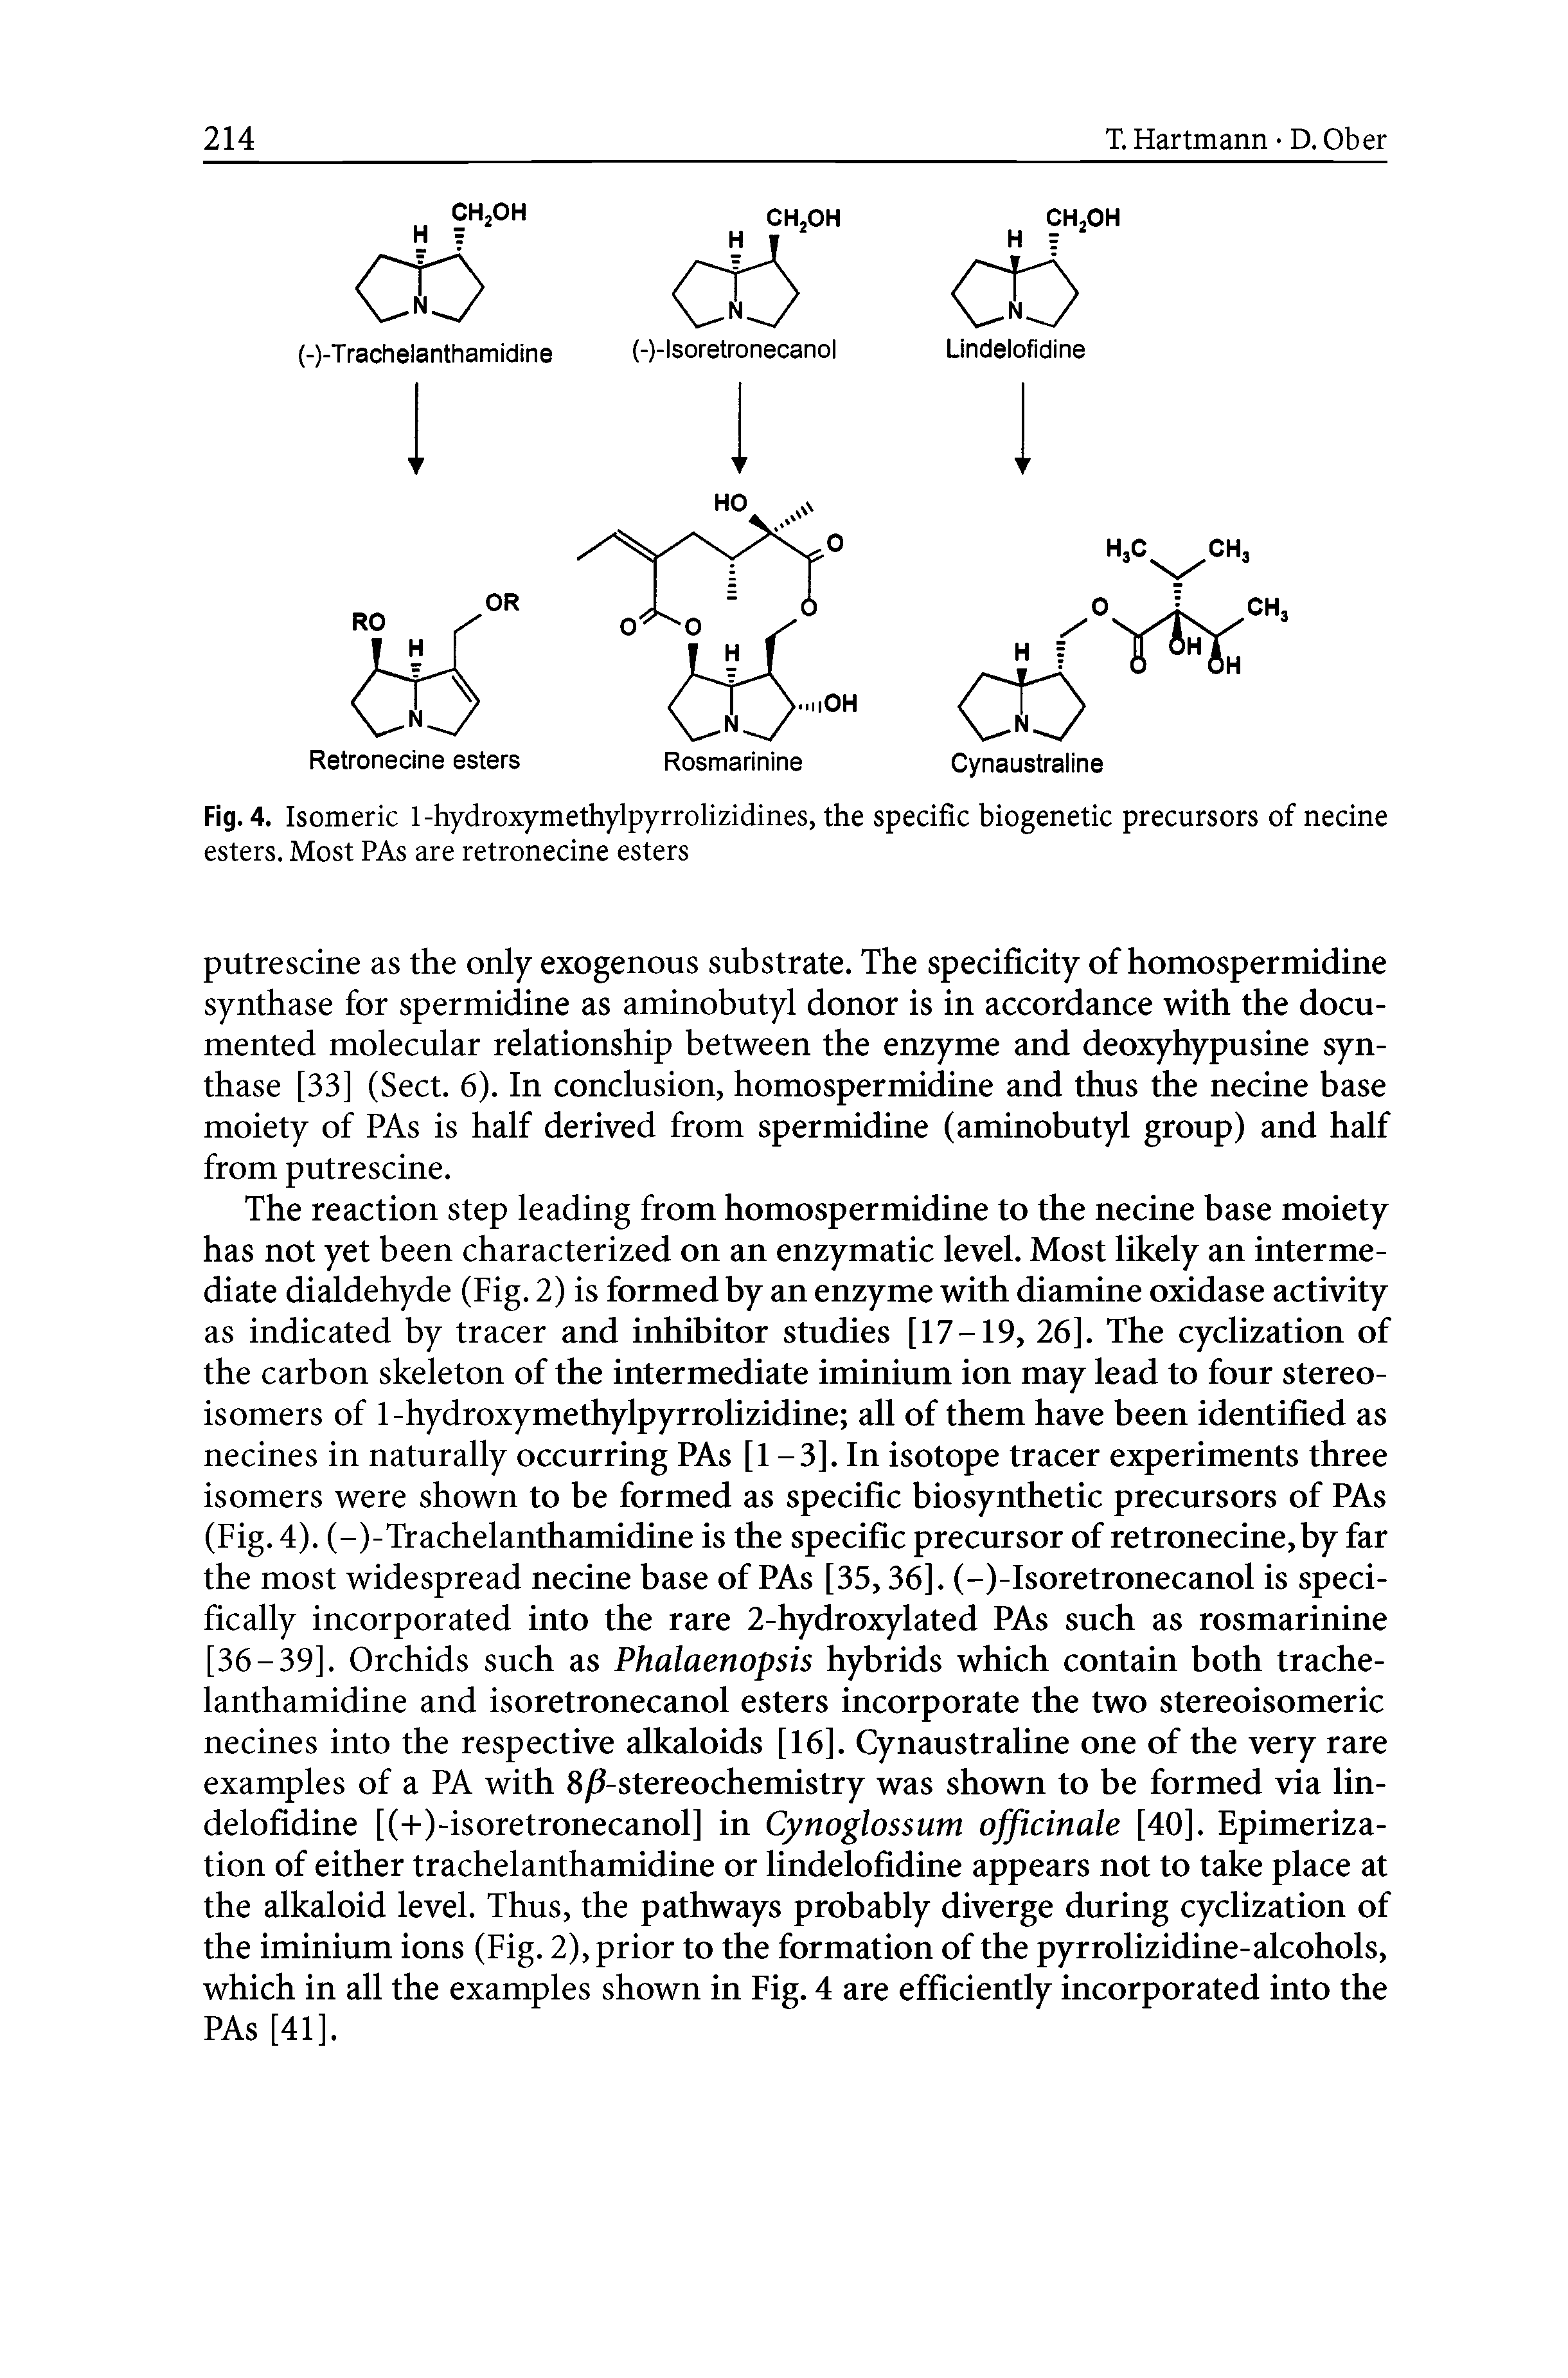 Fig. 4. Isomeric 1-hydroxymethylpyrrolizidines, the specific biogenetic precursors of necine esters. Most PAs are retronecine esters...